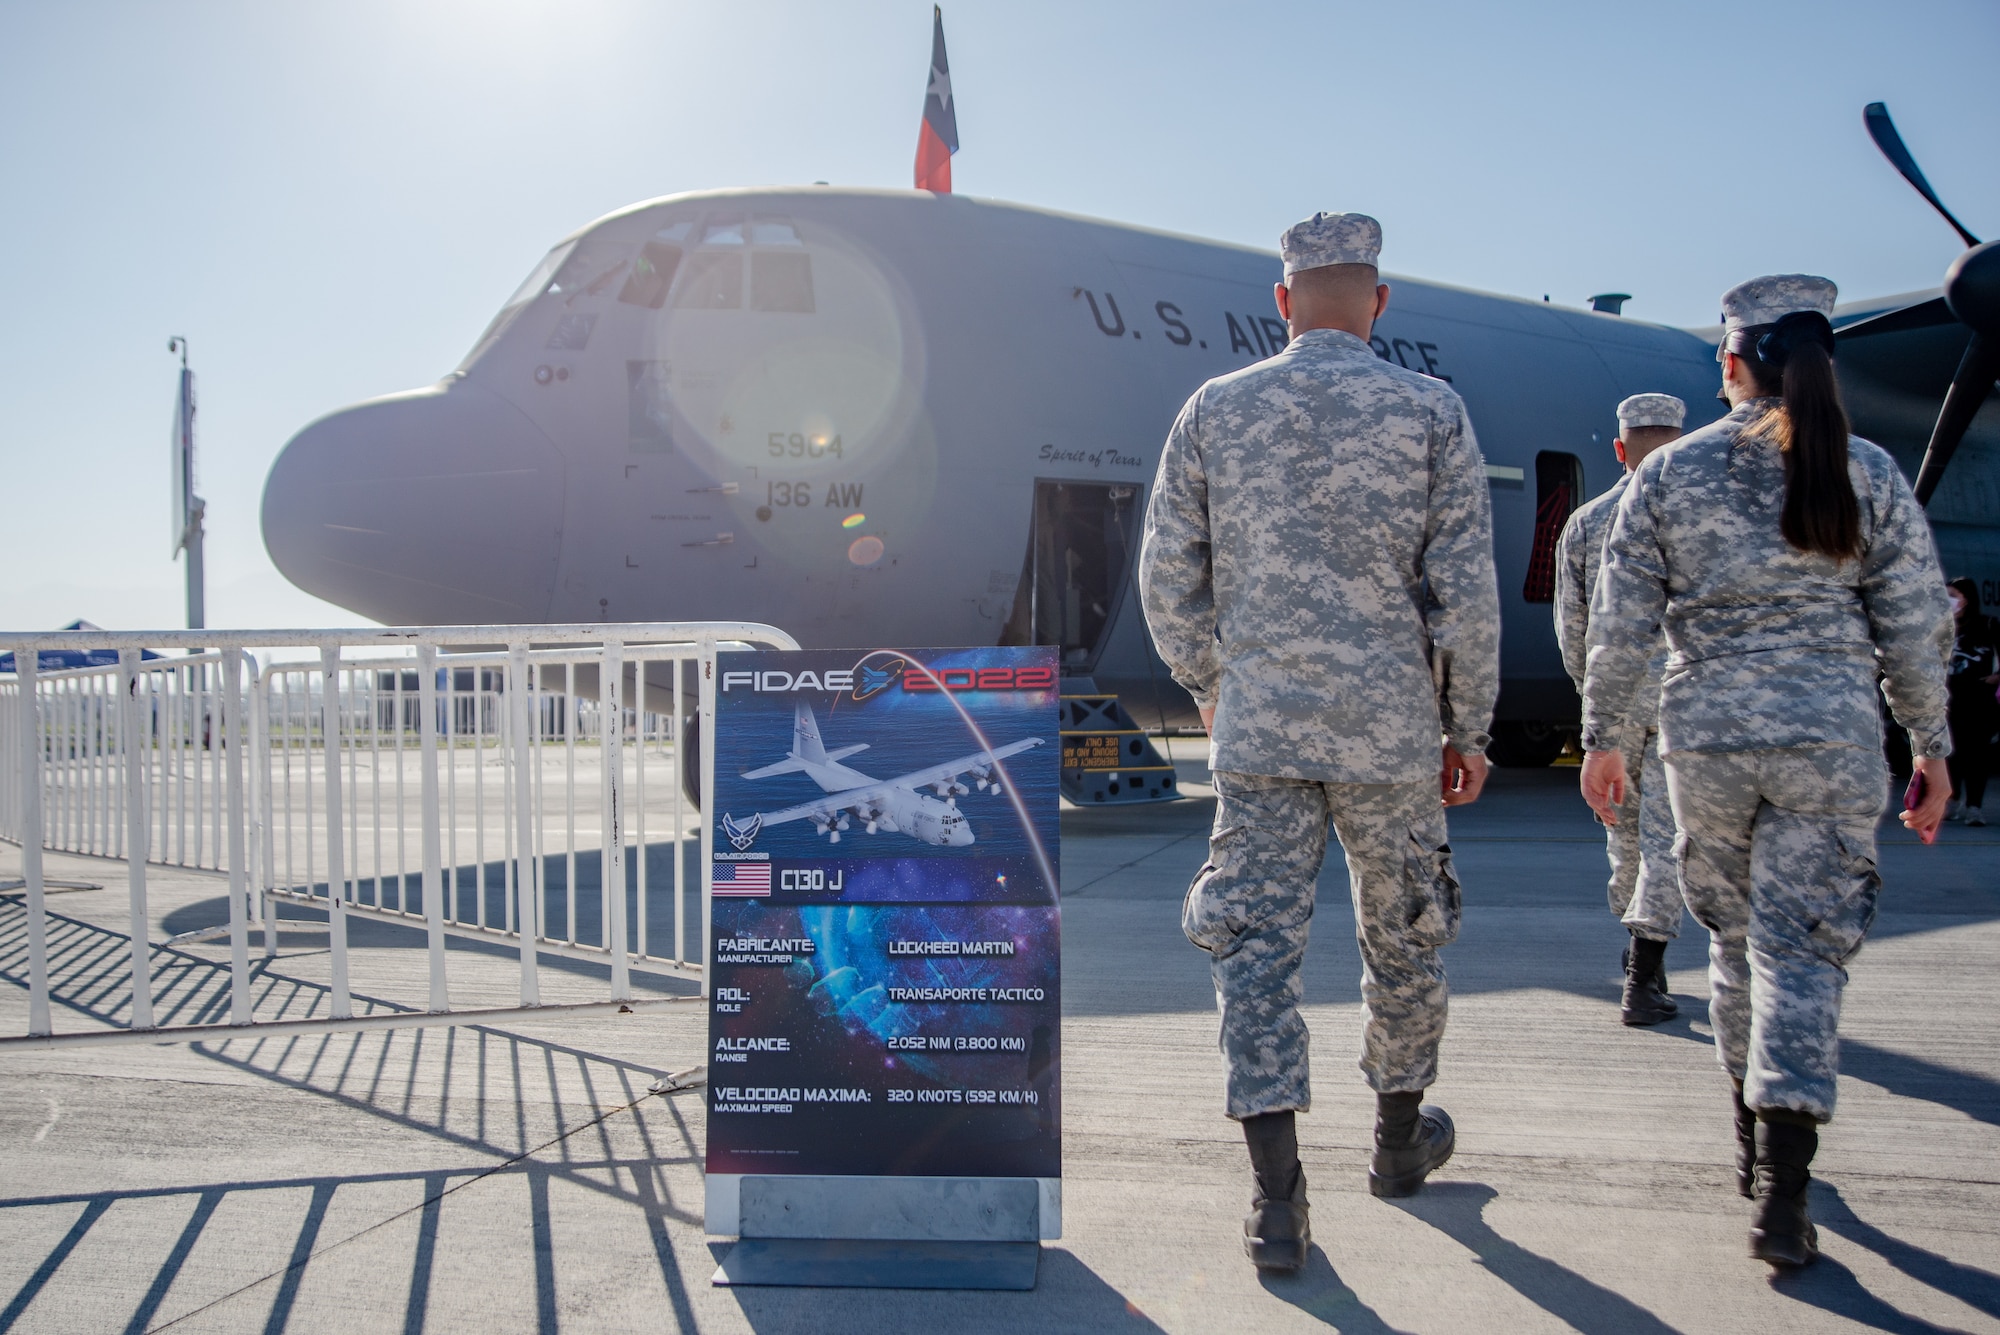 Citizen Airmen showcase the C-130J during FIDAE 2022.